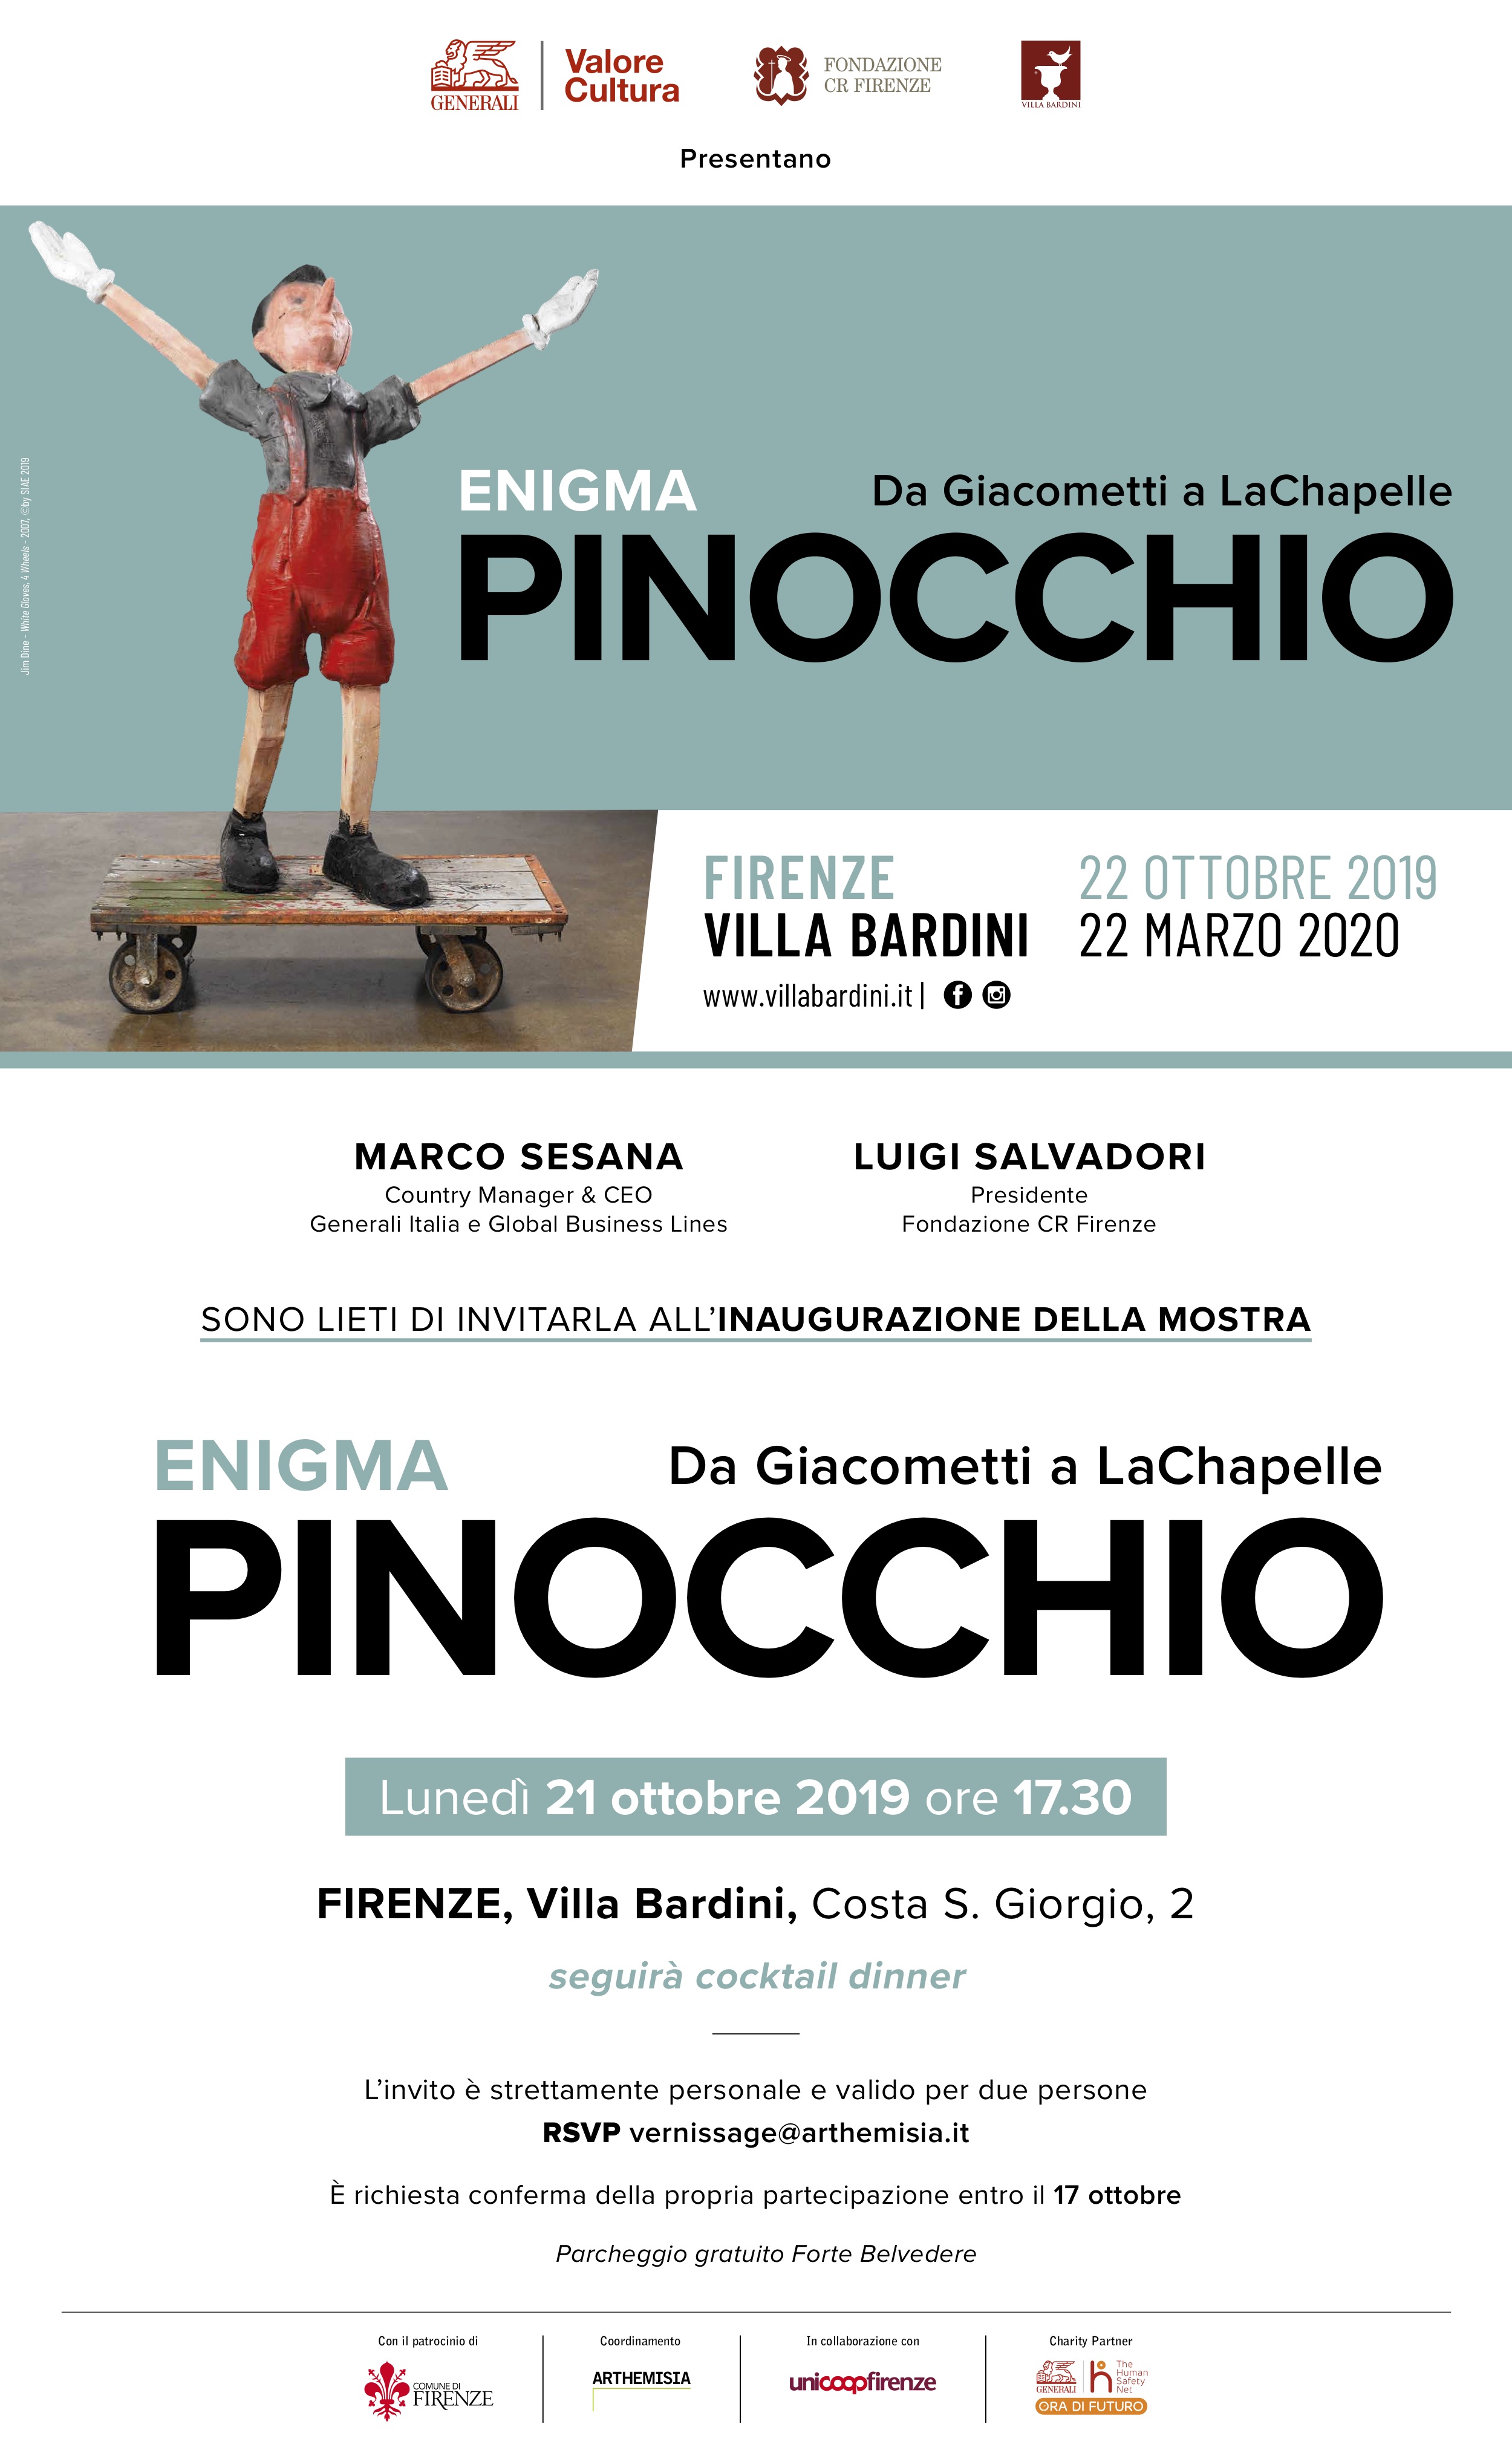 Flyer for Enigma Pinocchio